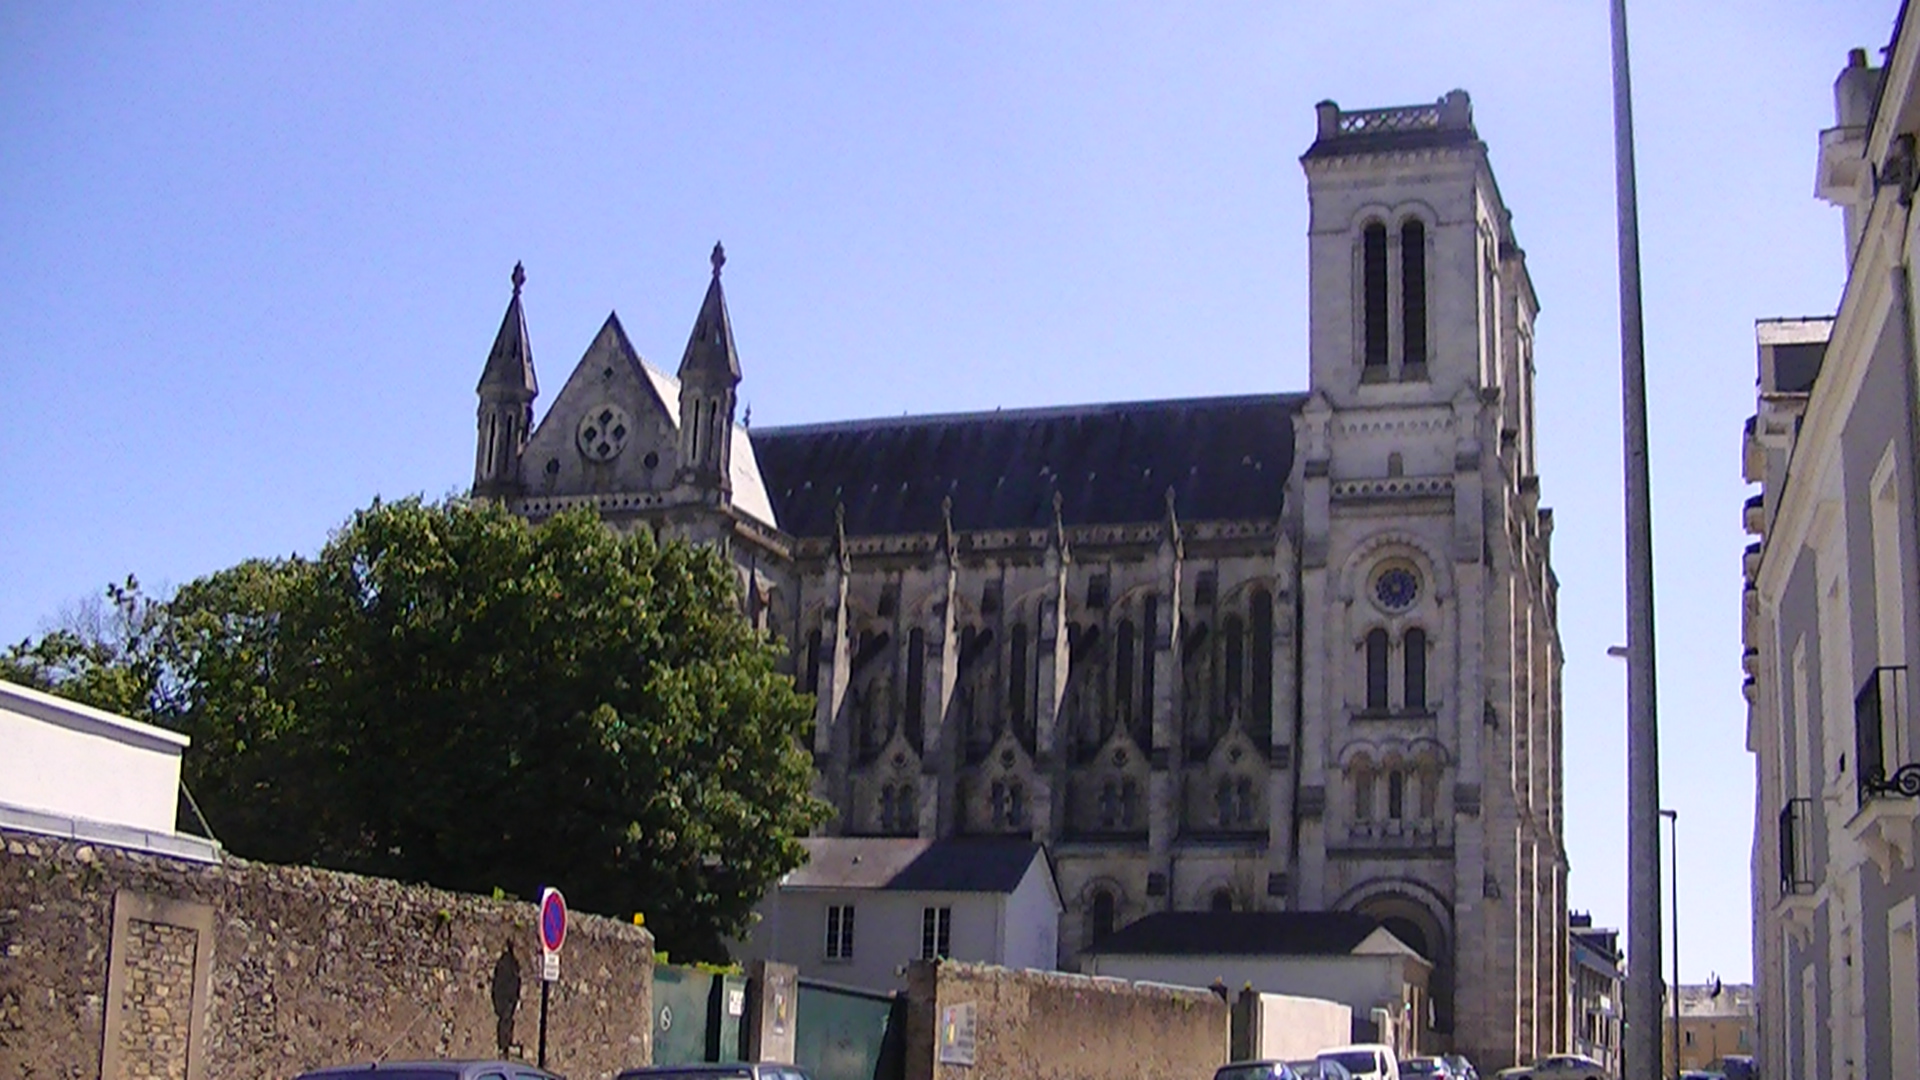 Basilica of Saint Donatien and Saint Rogatien in Nantes (France)